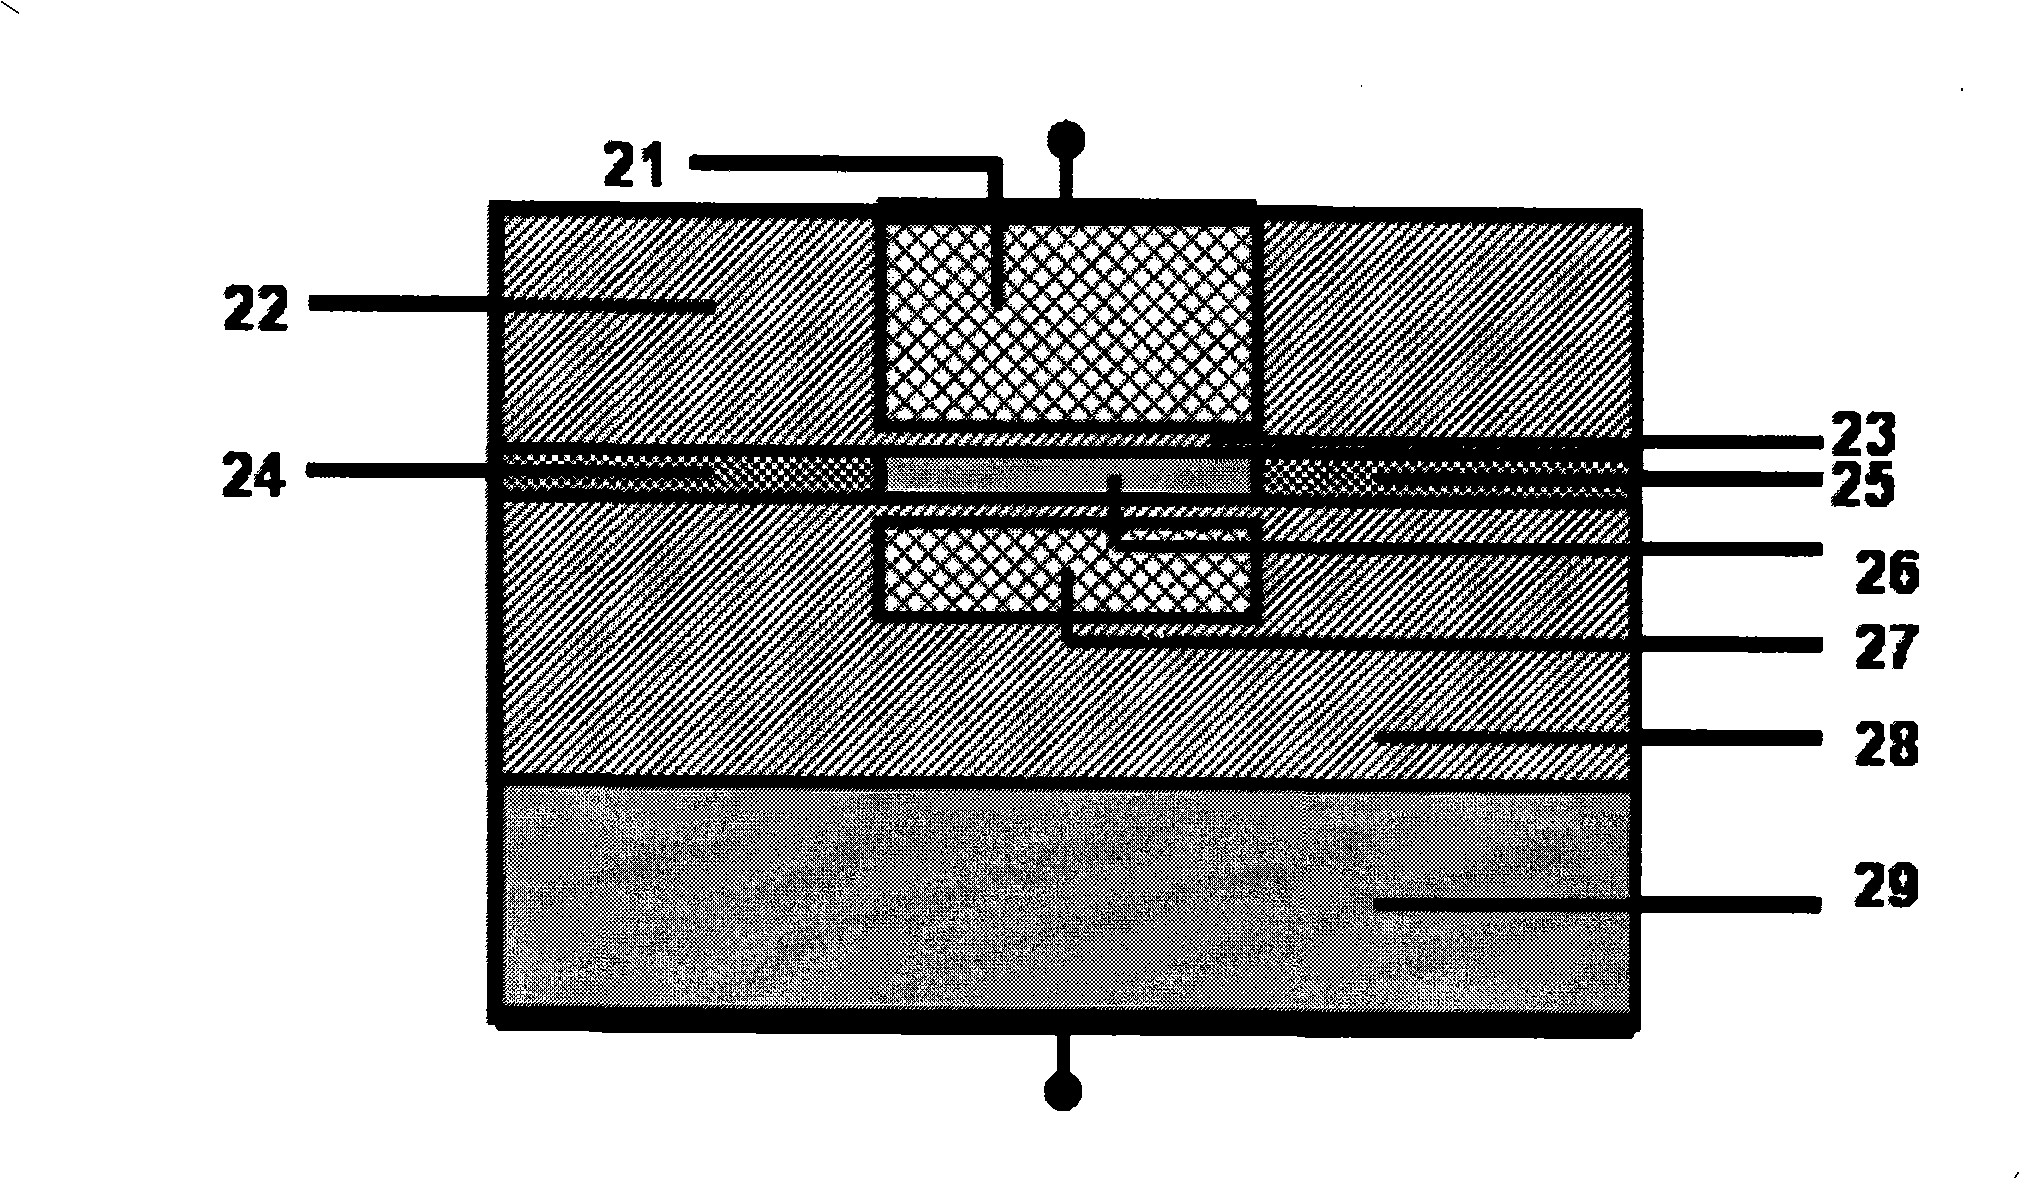 Production method of bulk silicon nano line transistor device